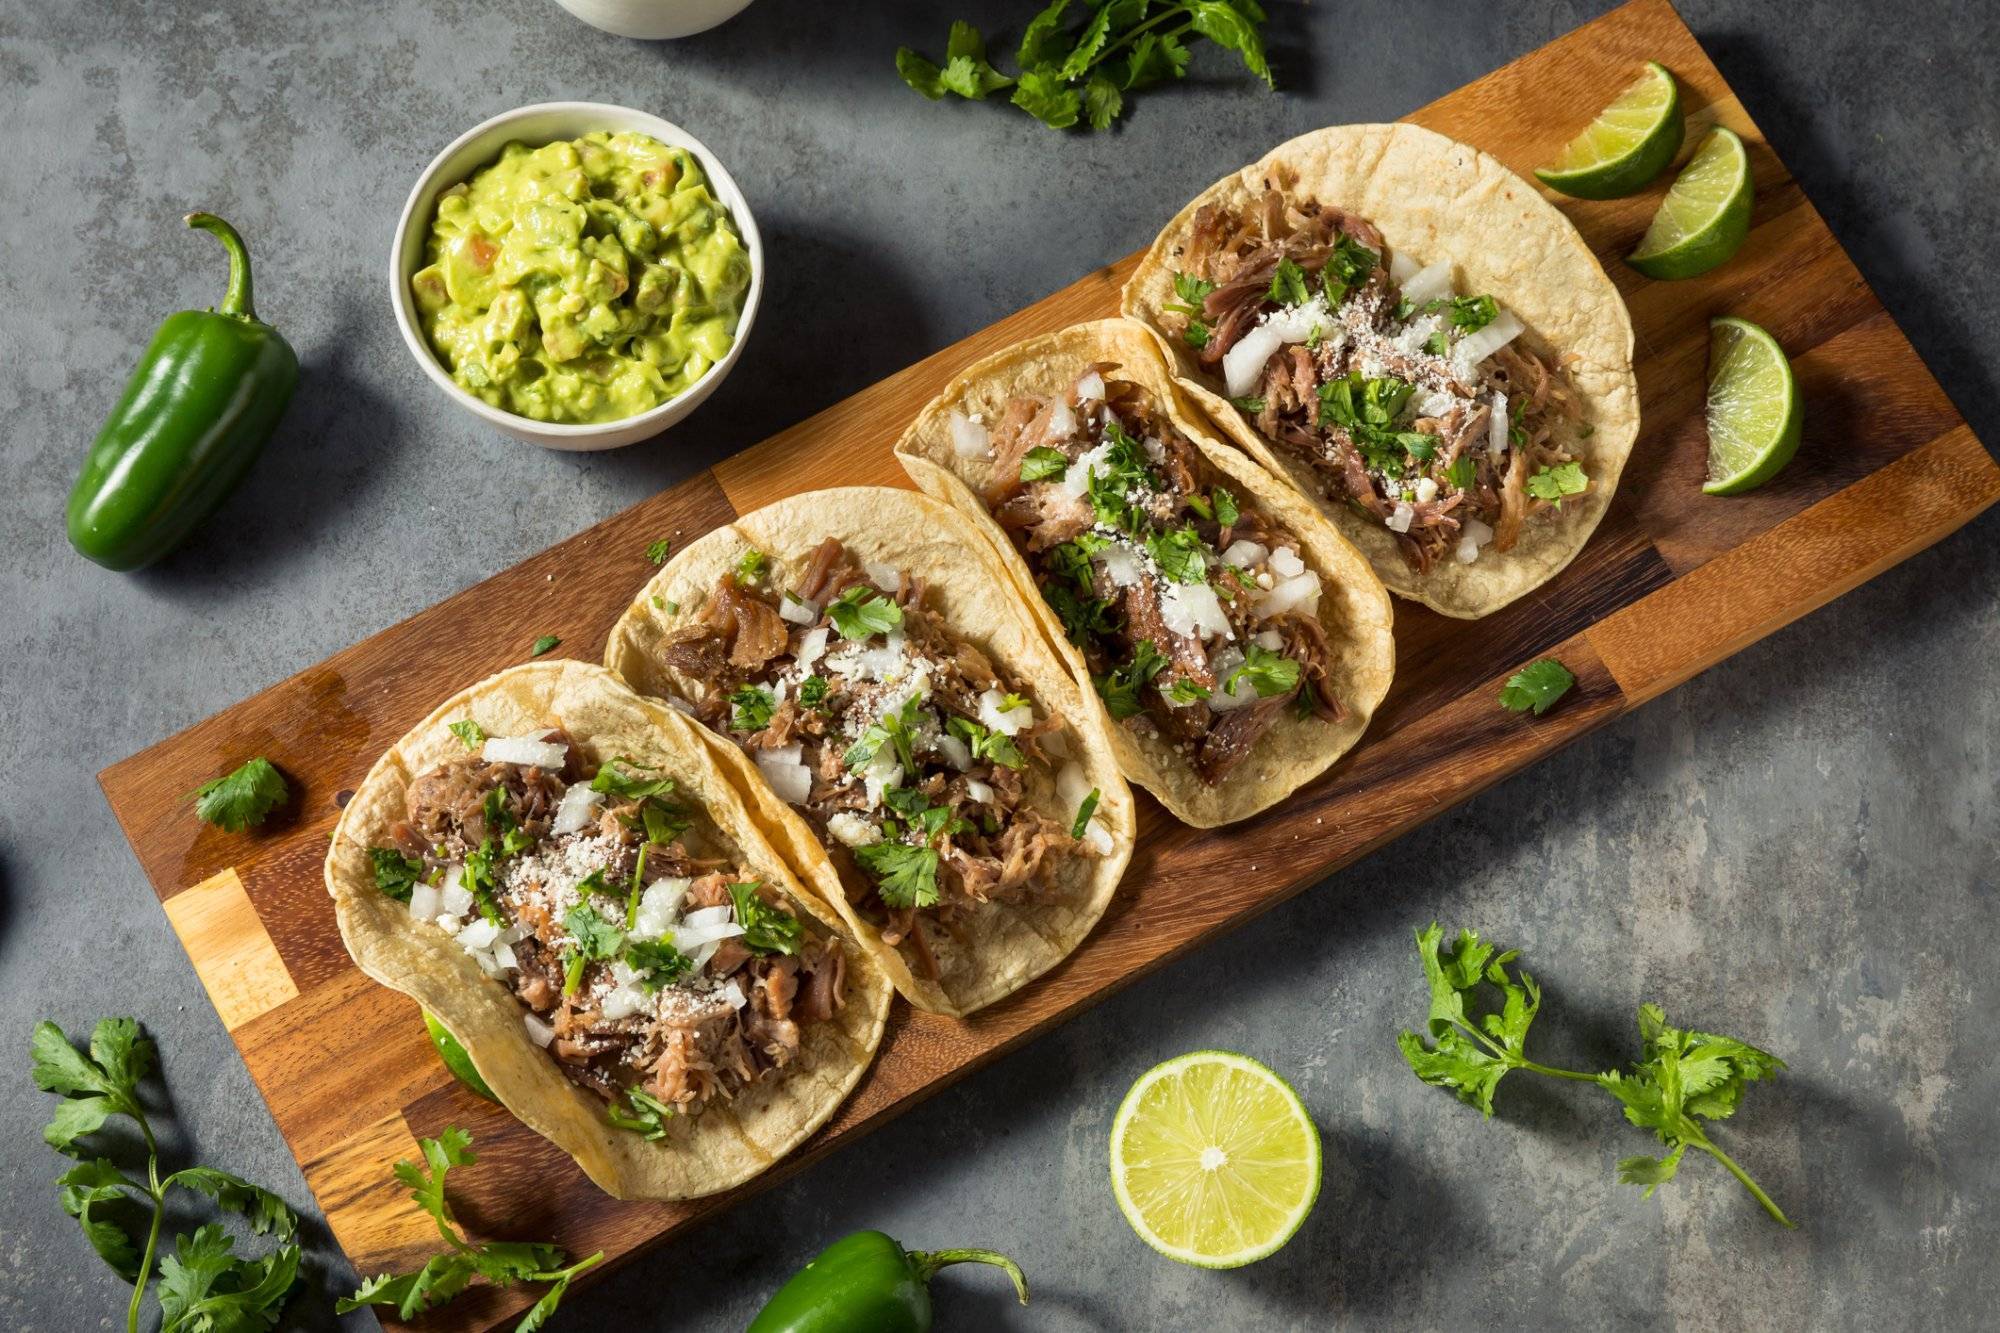 Satisfy Your Taco Cravings at Fito's Tacos de Trompo in Carrollton